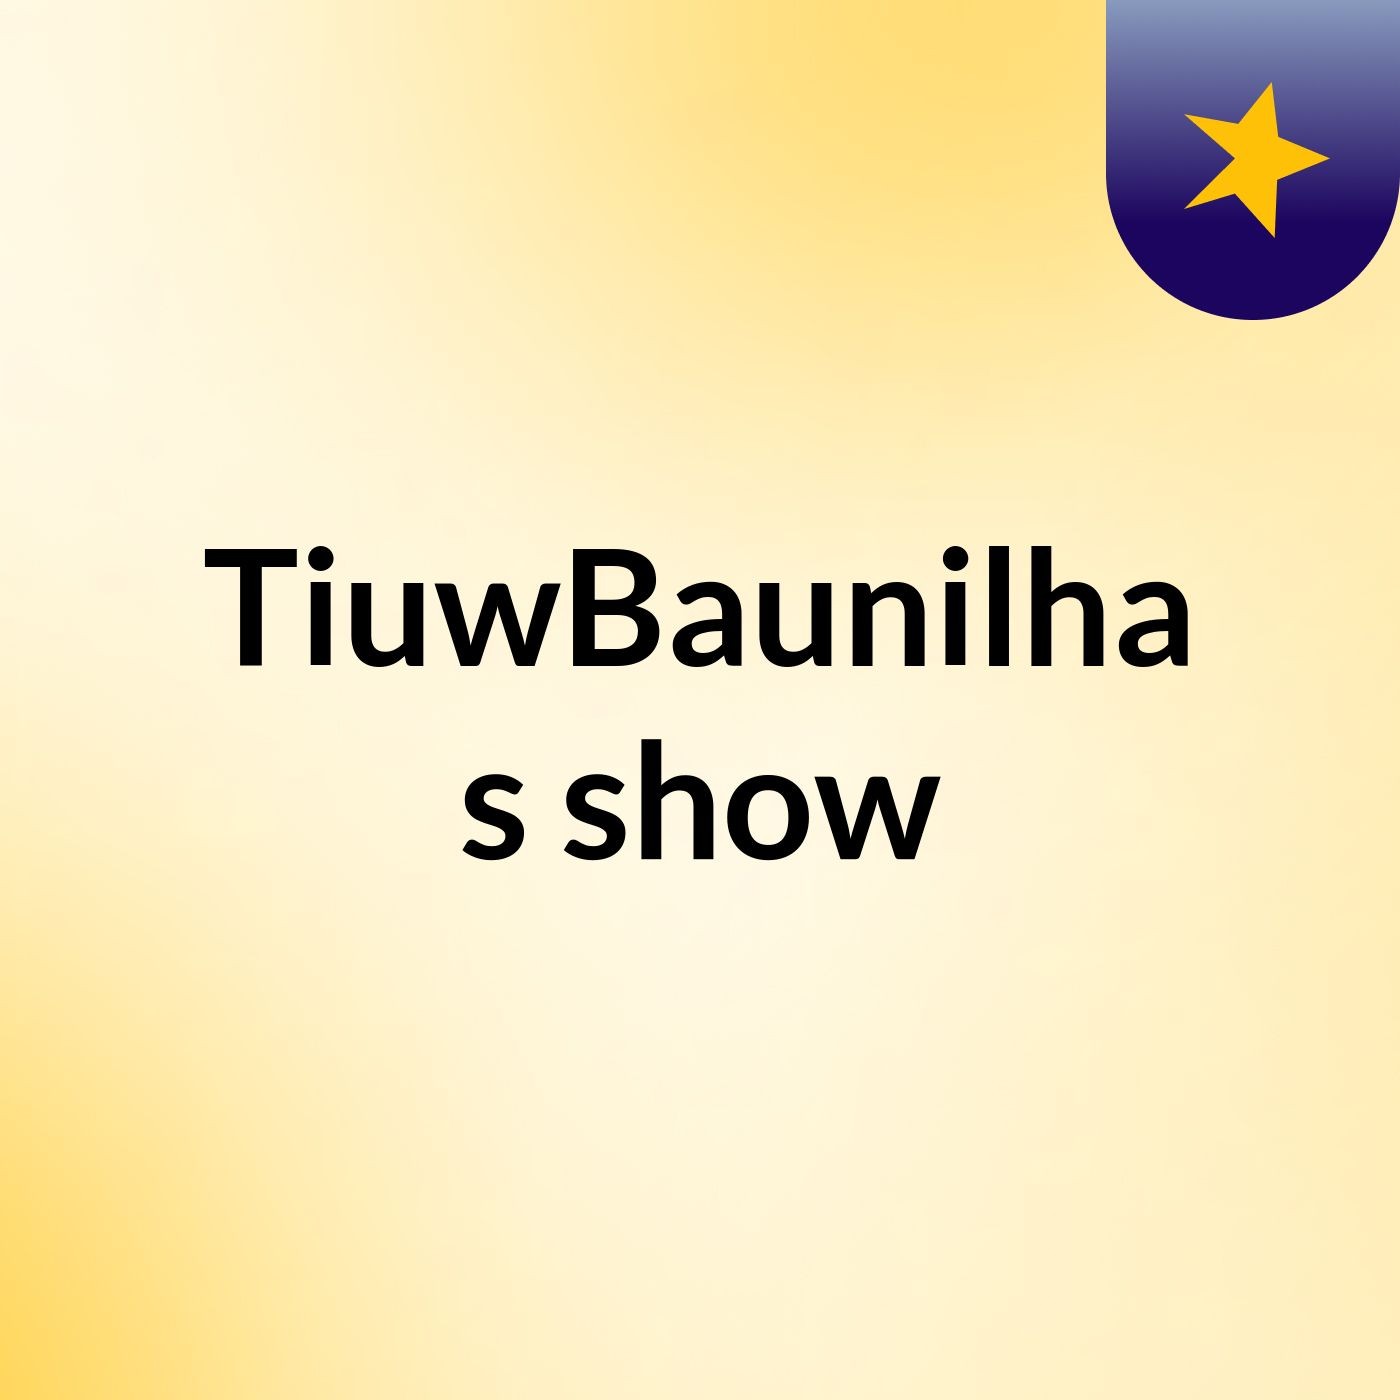 TiuwBaunilha's show